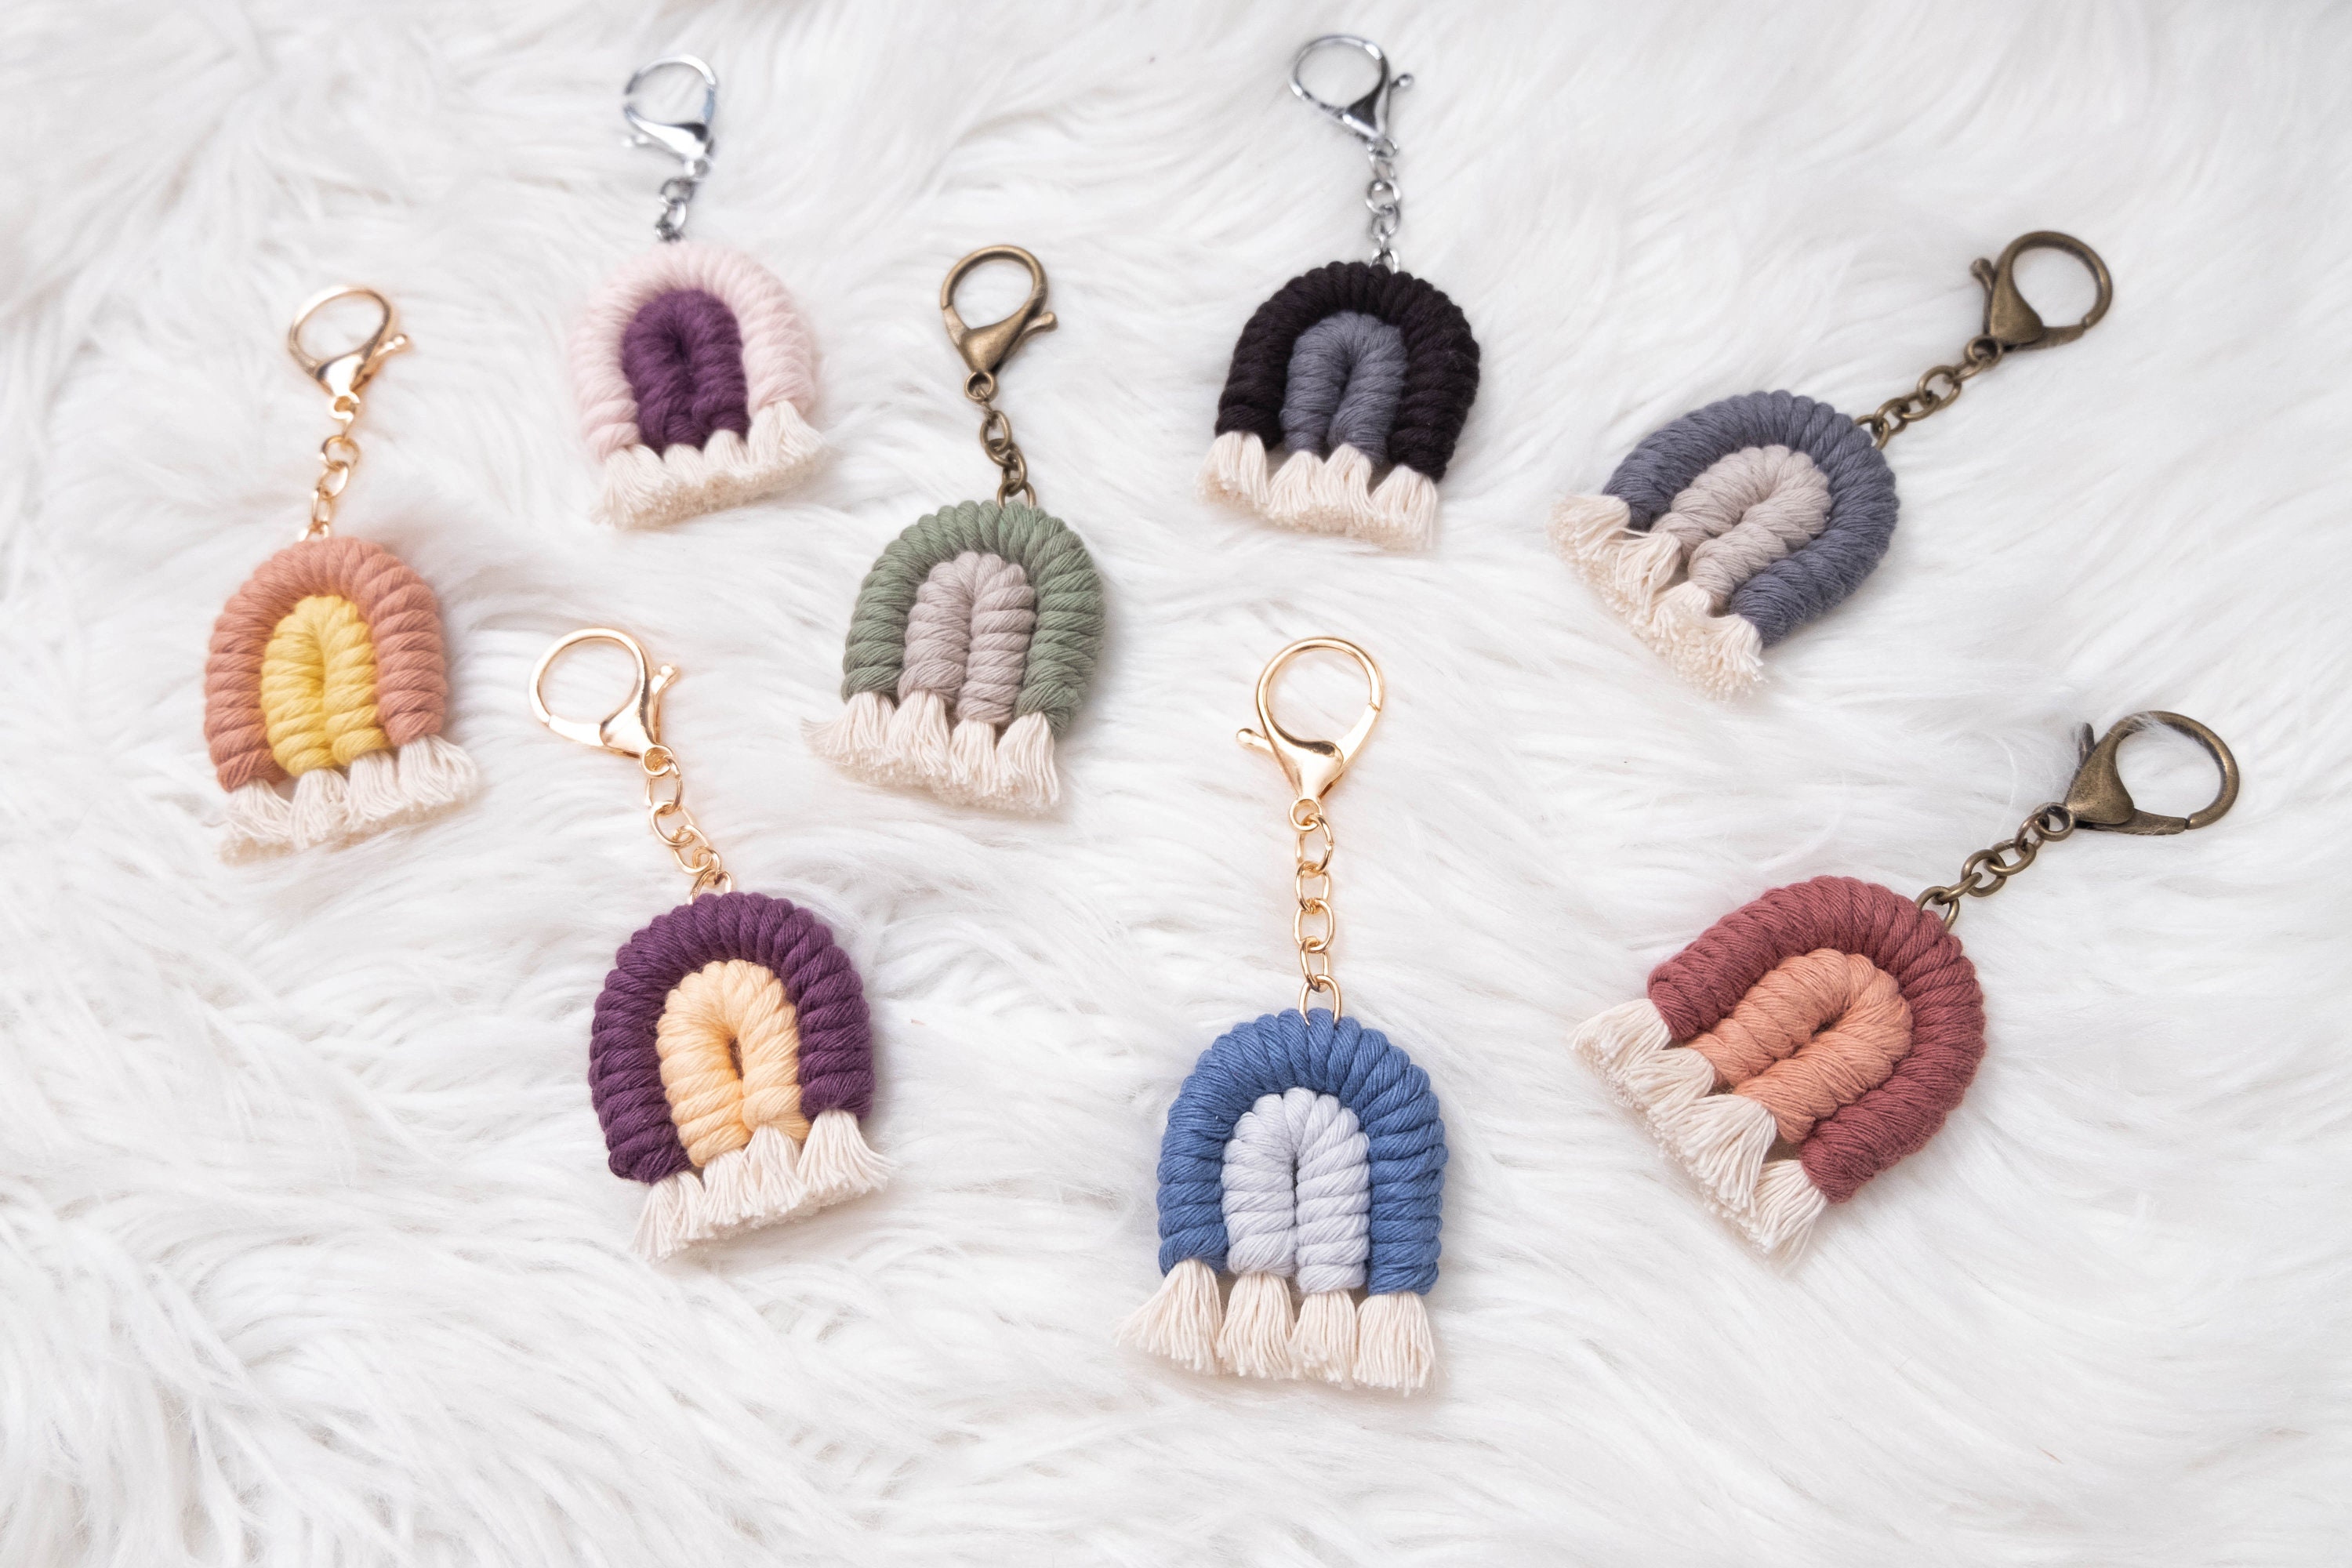 Macrame Keychain, Rope Keychain Tassel Fringe, Cute Macrame Key Chain,  Short Small Keys Fob/ring/dangles Custom Color, Bag Charm, Boho Gift 